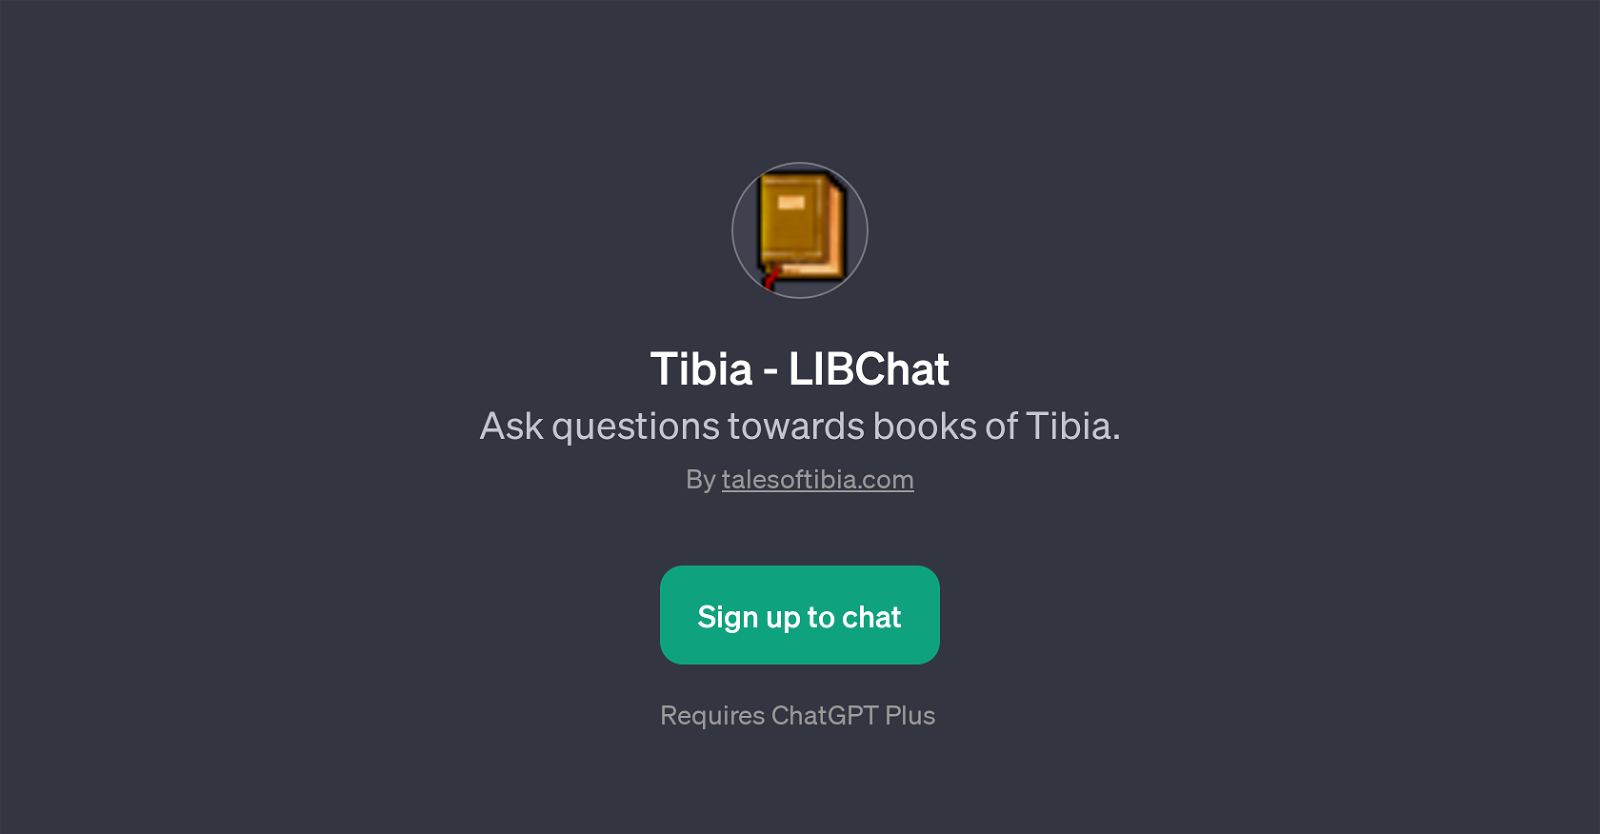 Tibia - LIBChat website